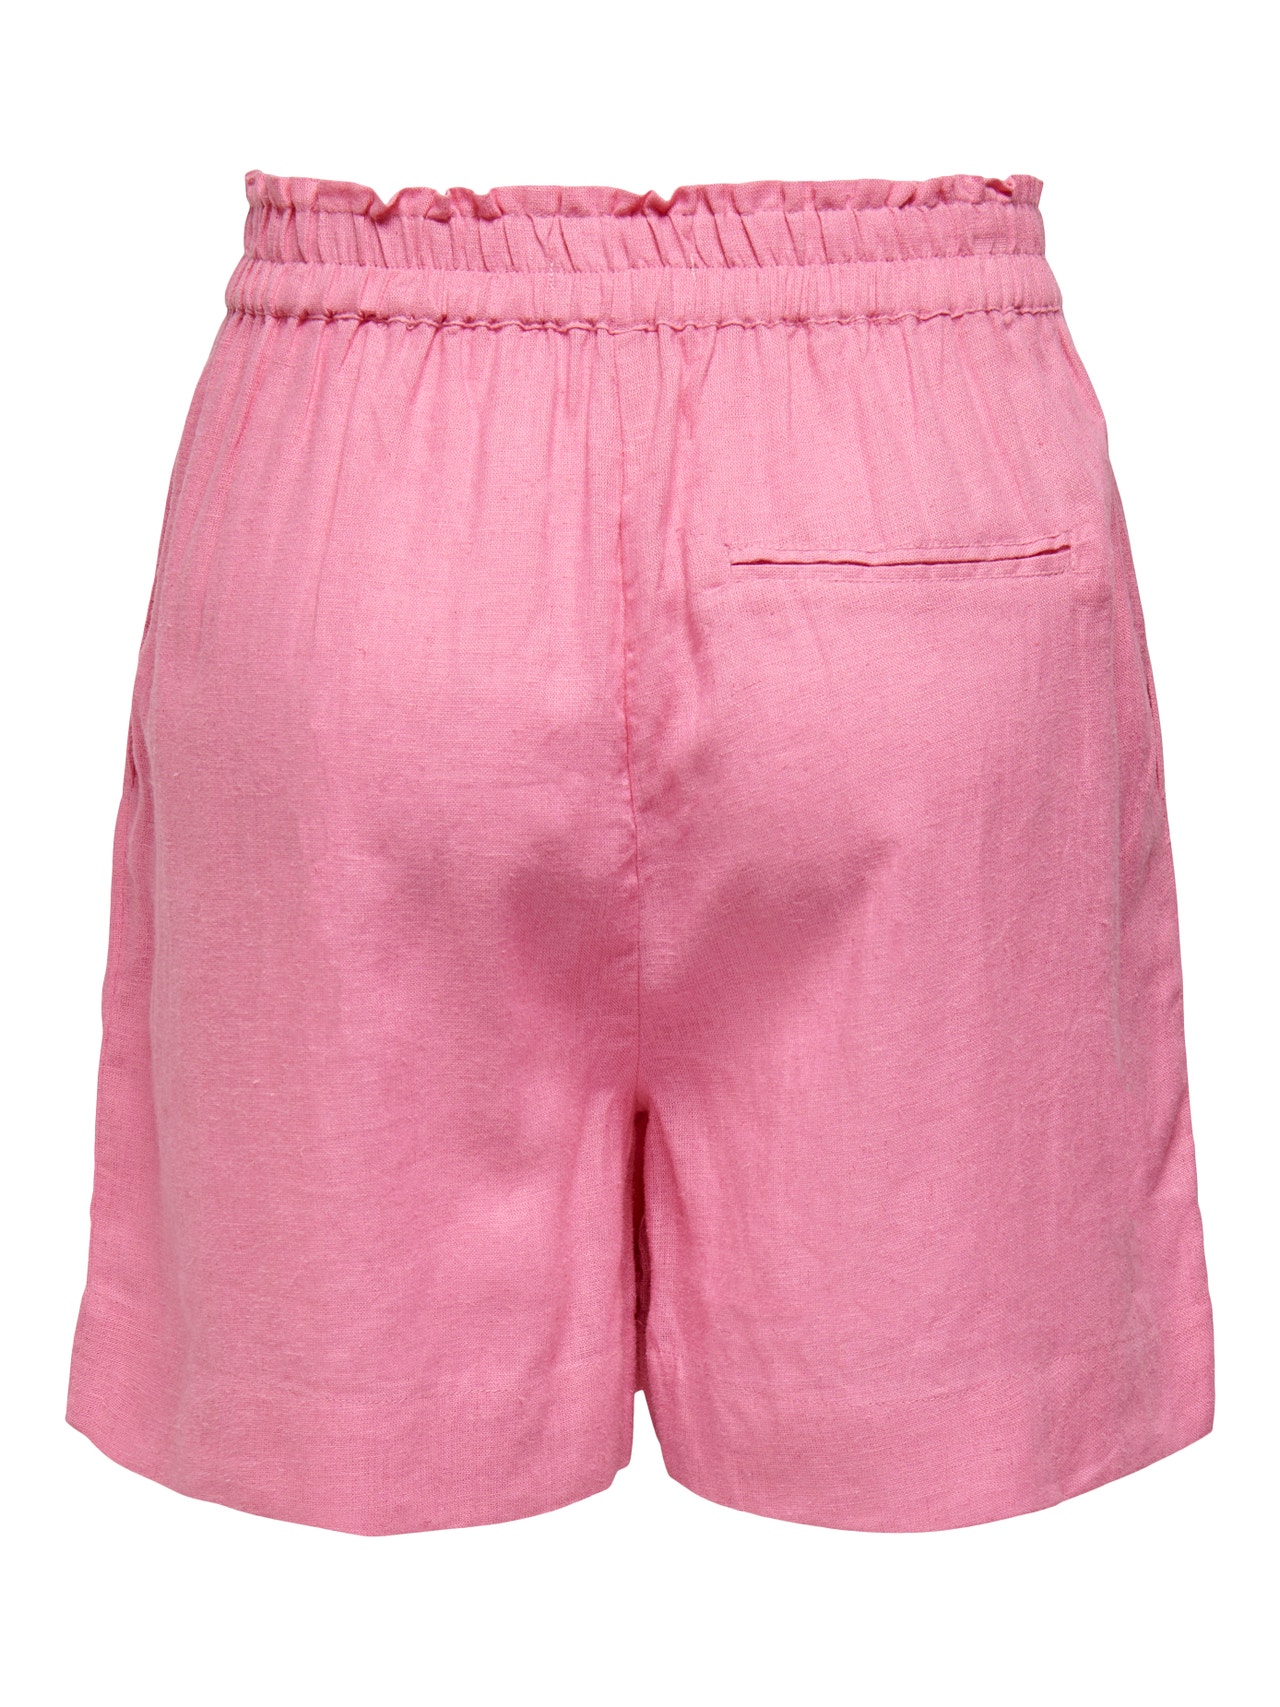 Regular Fit Cotton Shorts - Light pink - Men